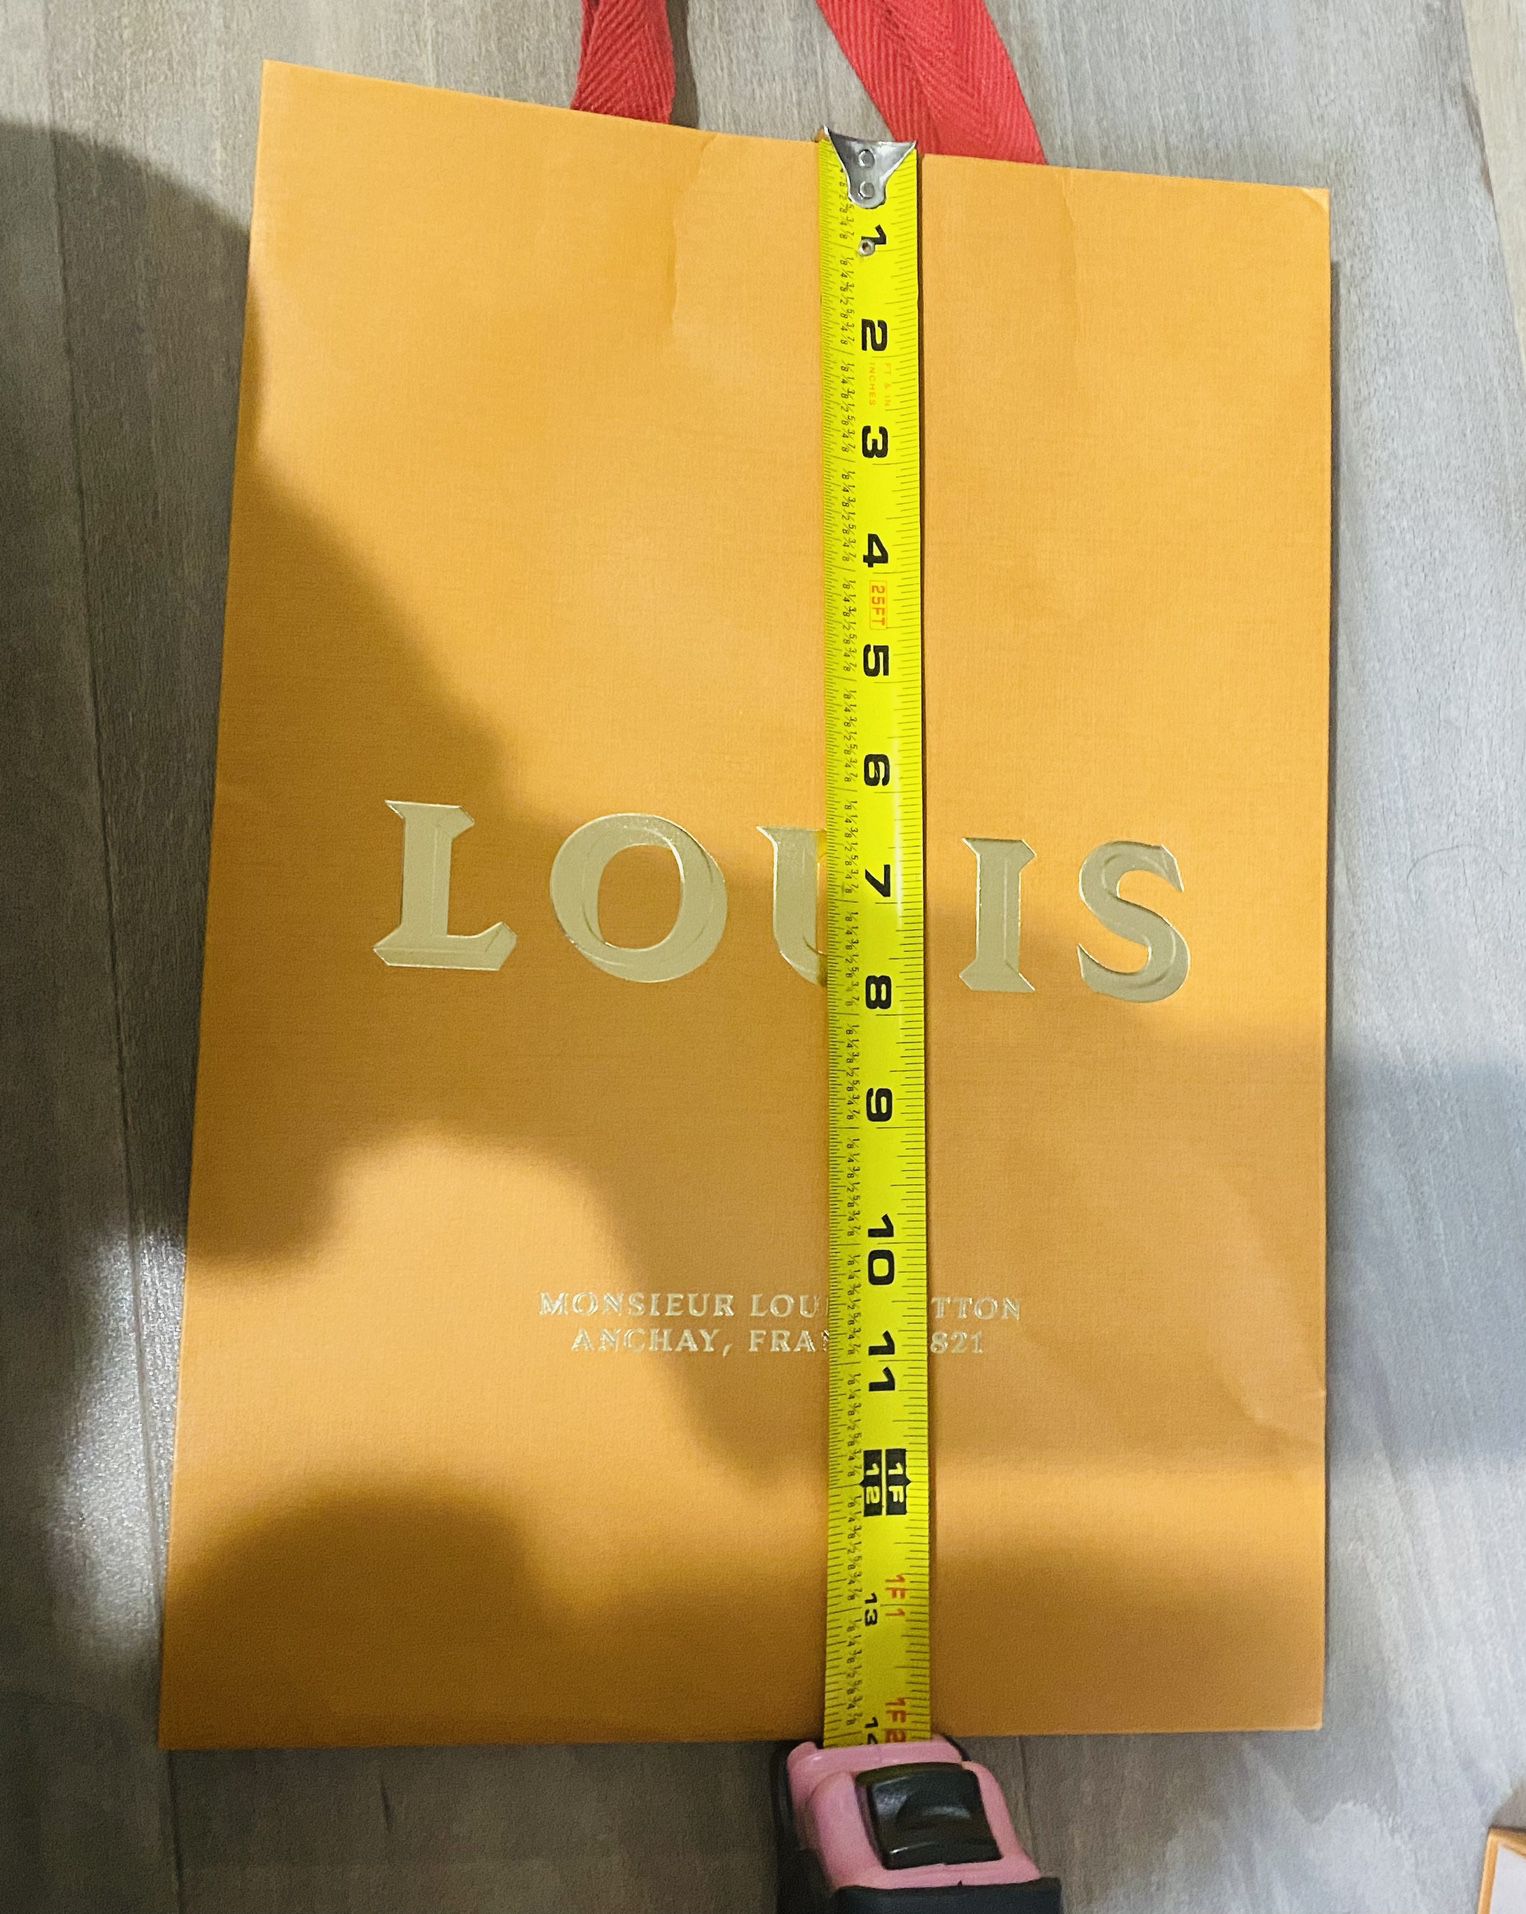 Louis Vuitton 2021 Holiday Box & Shopping Bag for Sale in Manhattan Beach,  CA - OfferUp